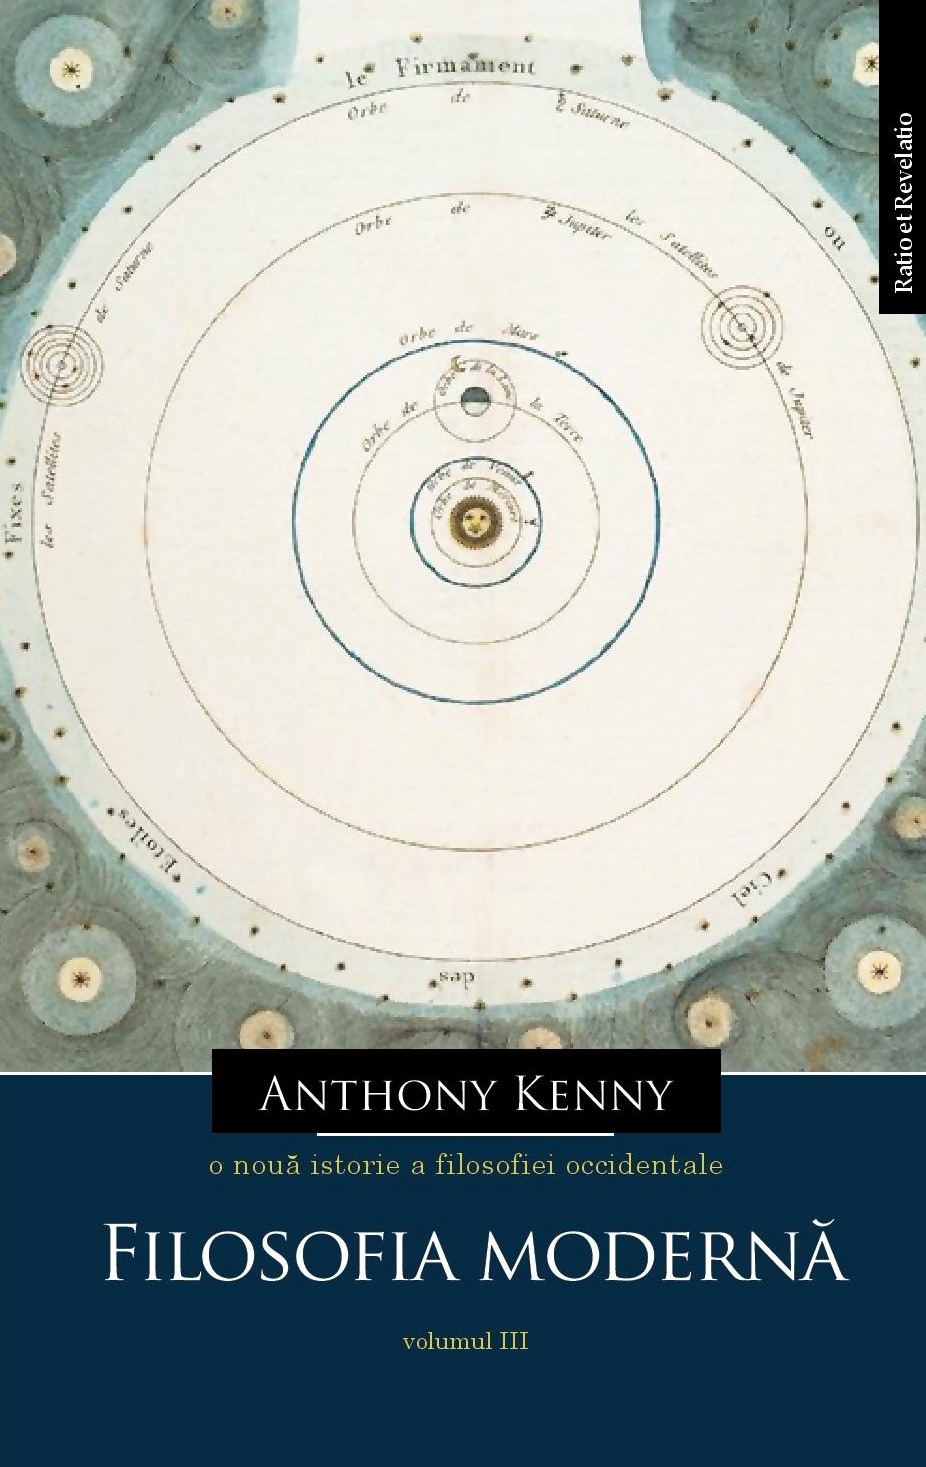 O noua istorie a filosofiei occidentale, volumul III | Anthony Kenny carturesti.ro poza bestsellers.ro